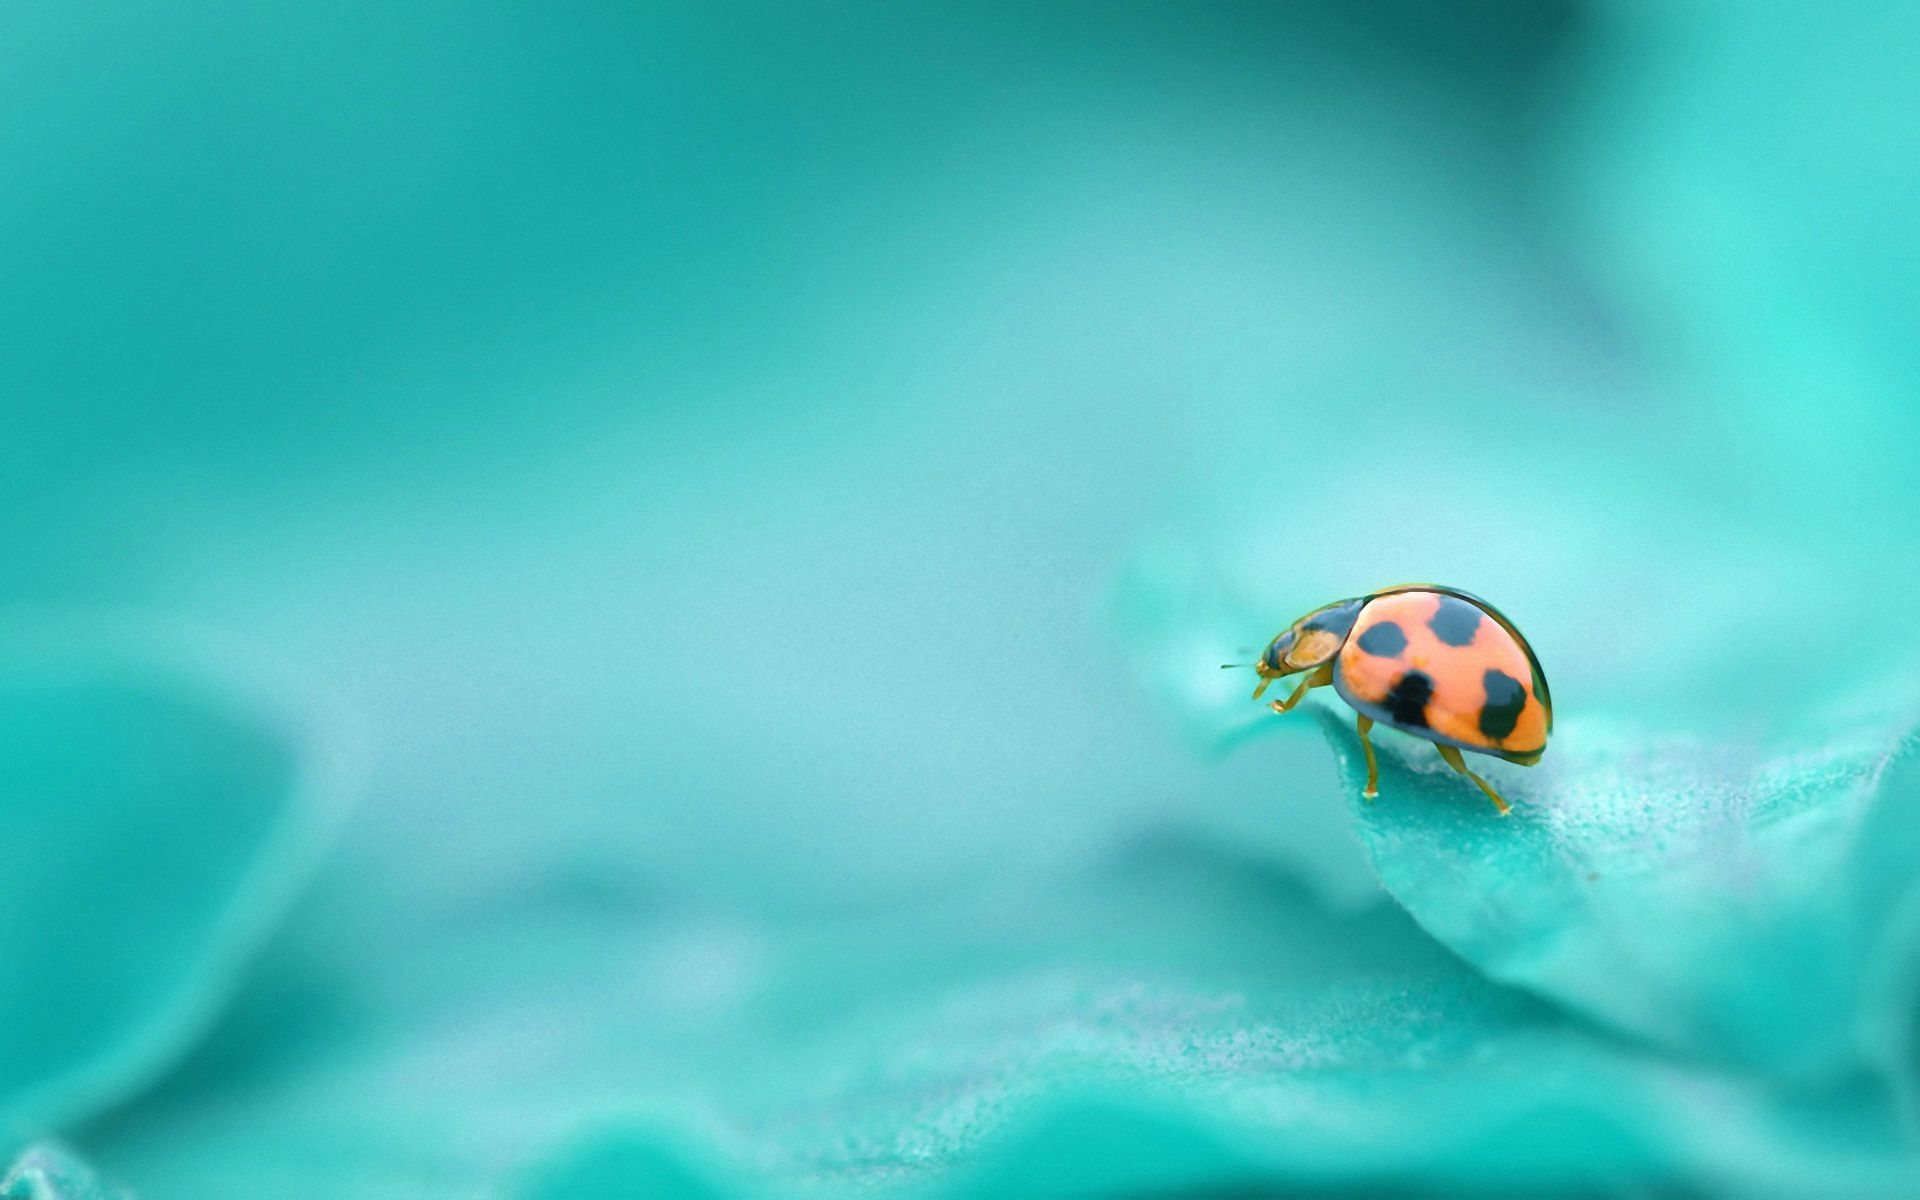 Download Cute Ladybug Wallpaper 3942 1920x1200 px High Resolution ...